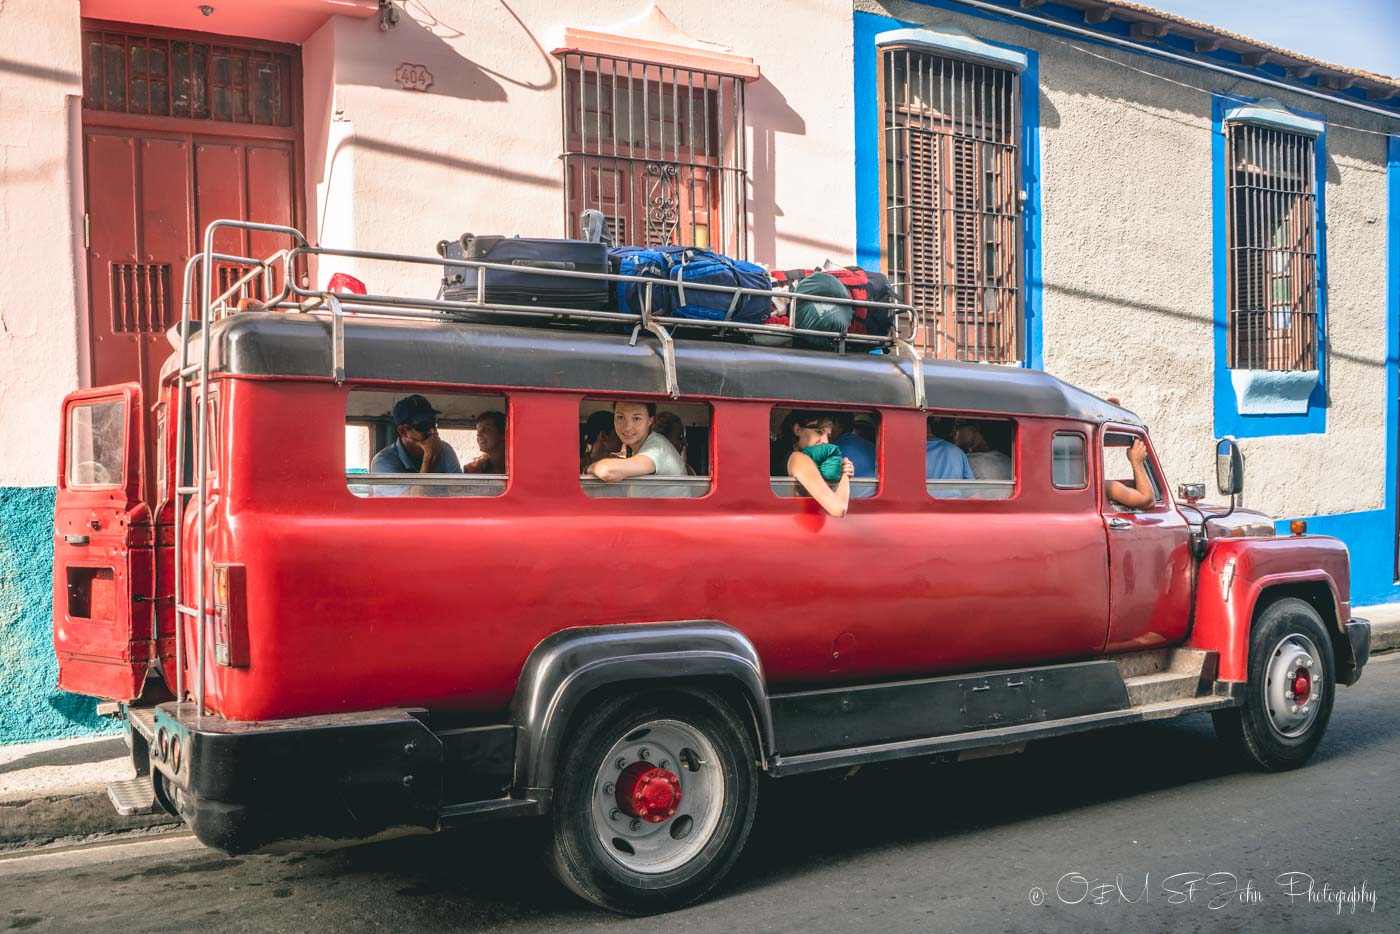 Colectivo taxi headed to Baracoa, Cuba